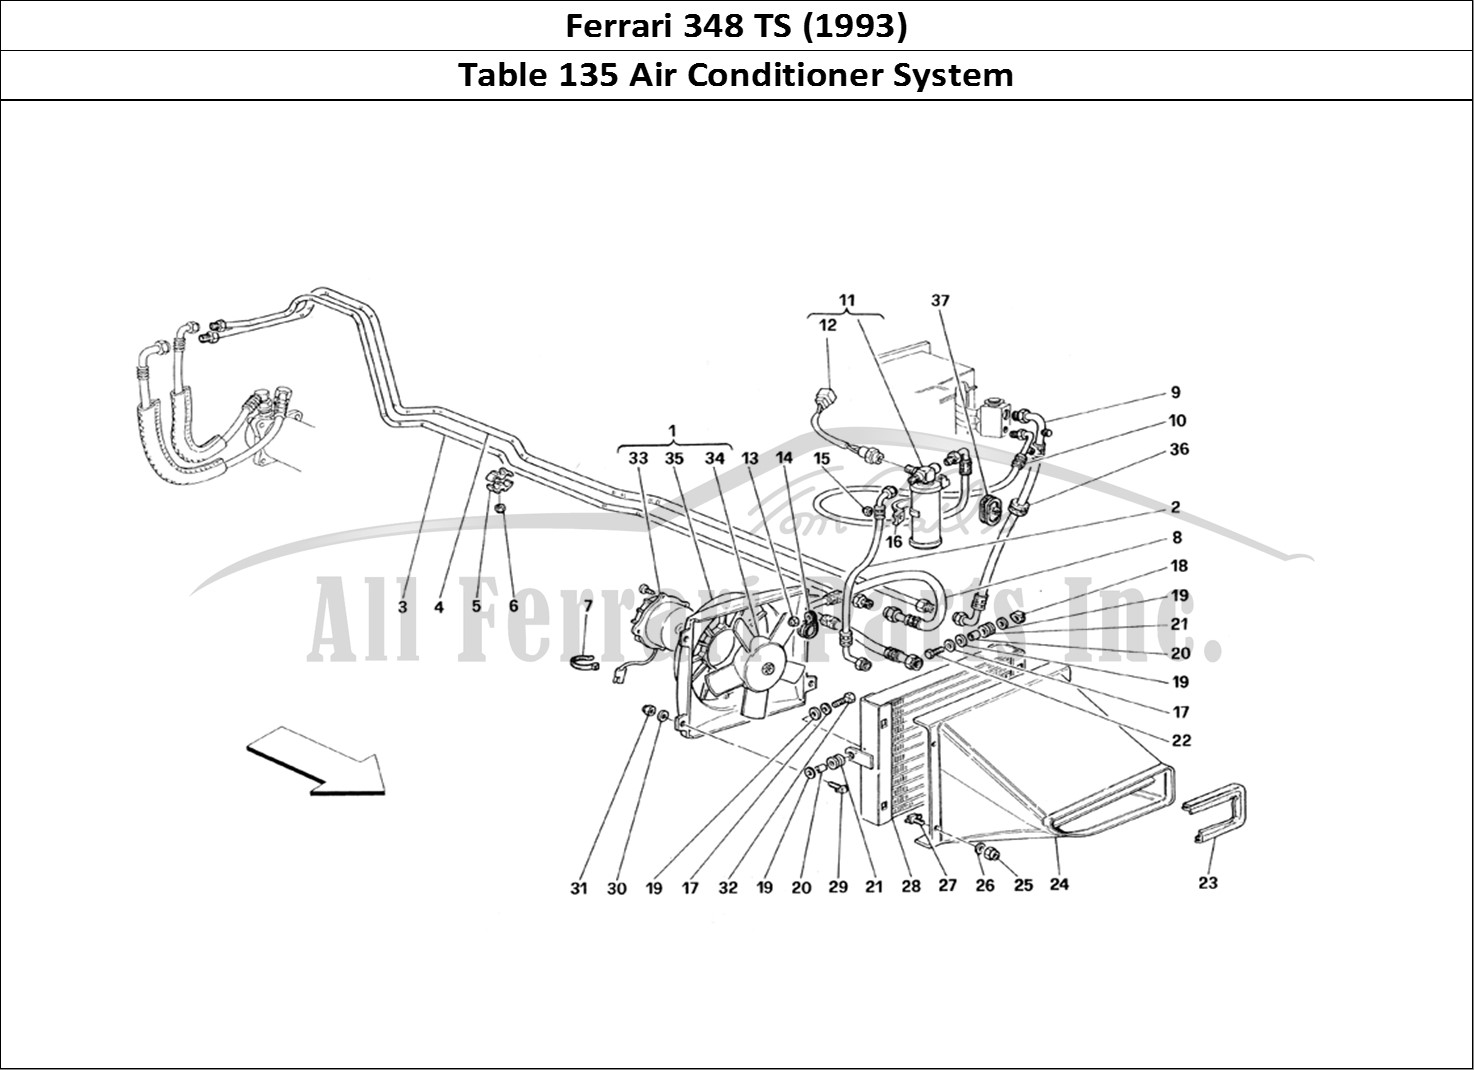 Ferrari Parts Ferrari 348 TB (1993) Page 135 Air Conditioning System